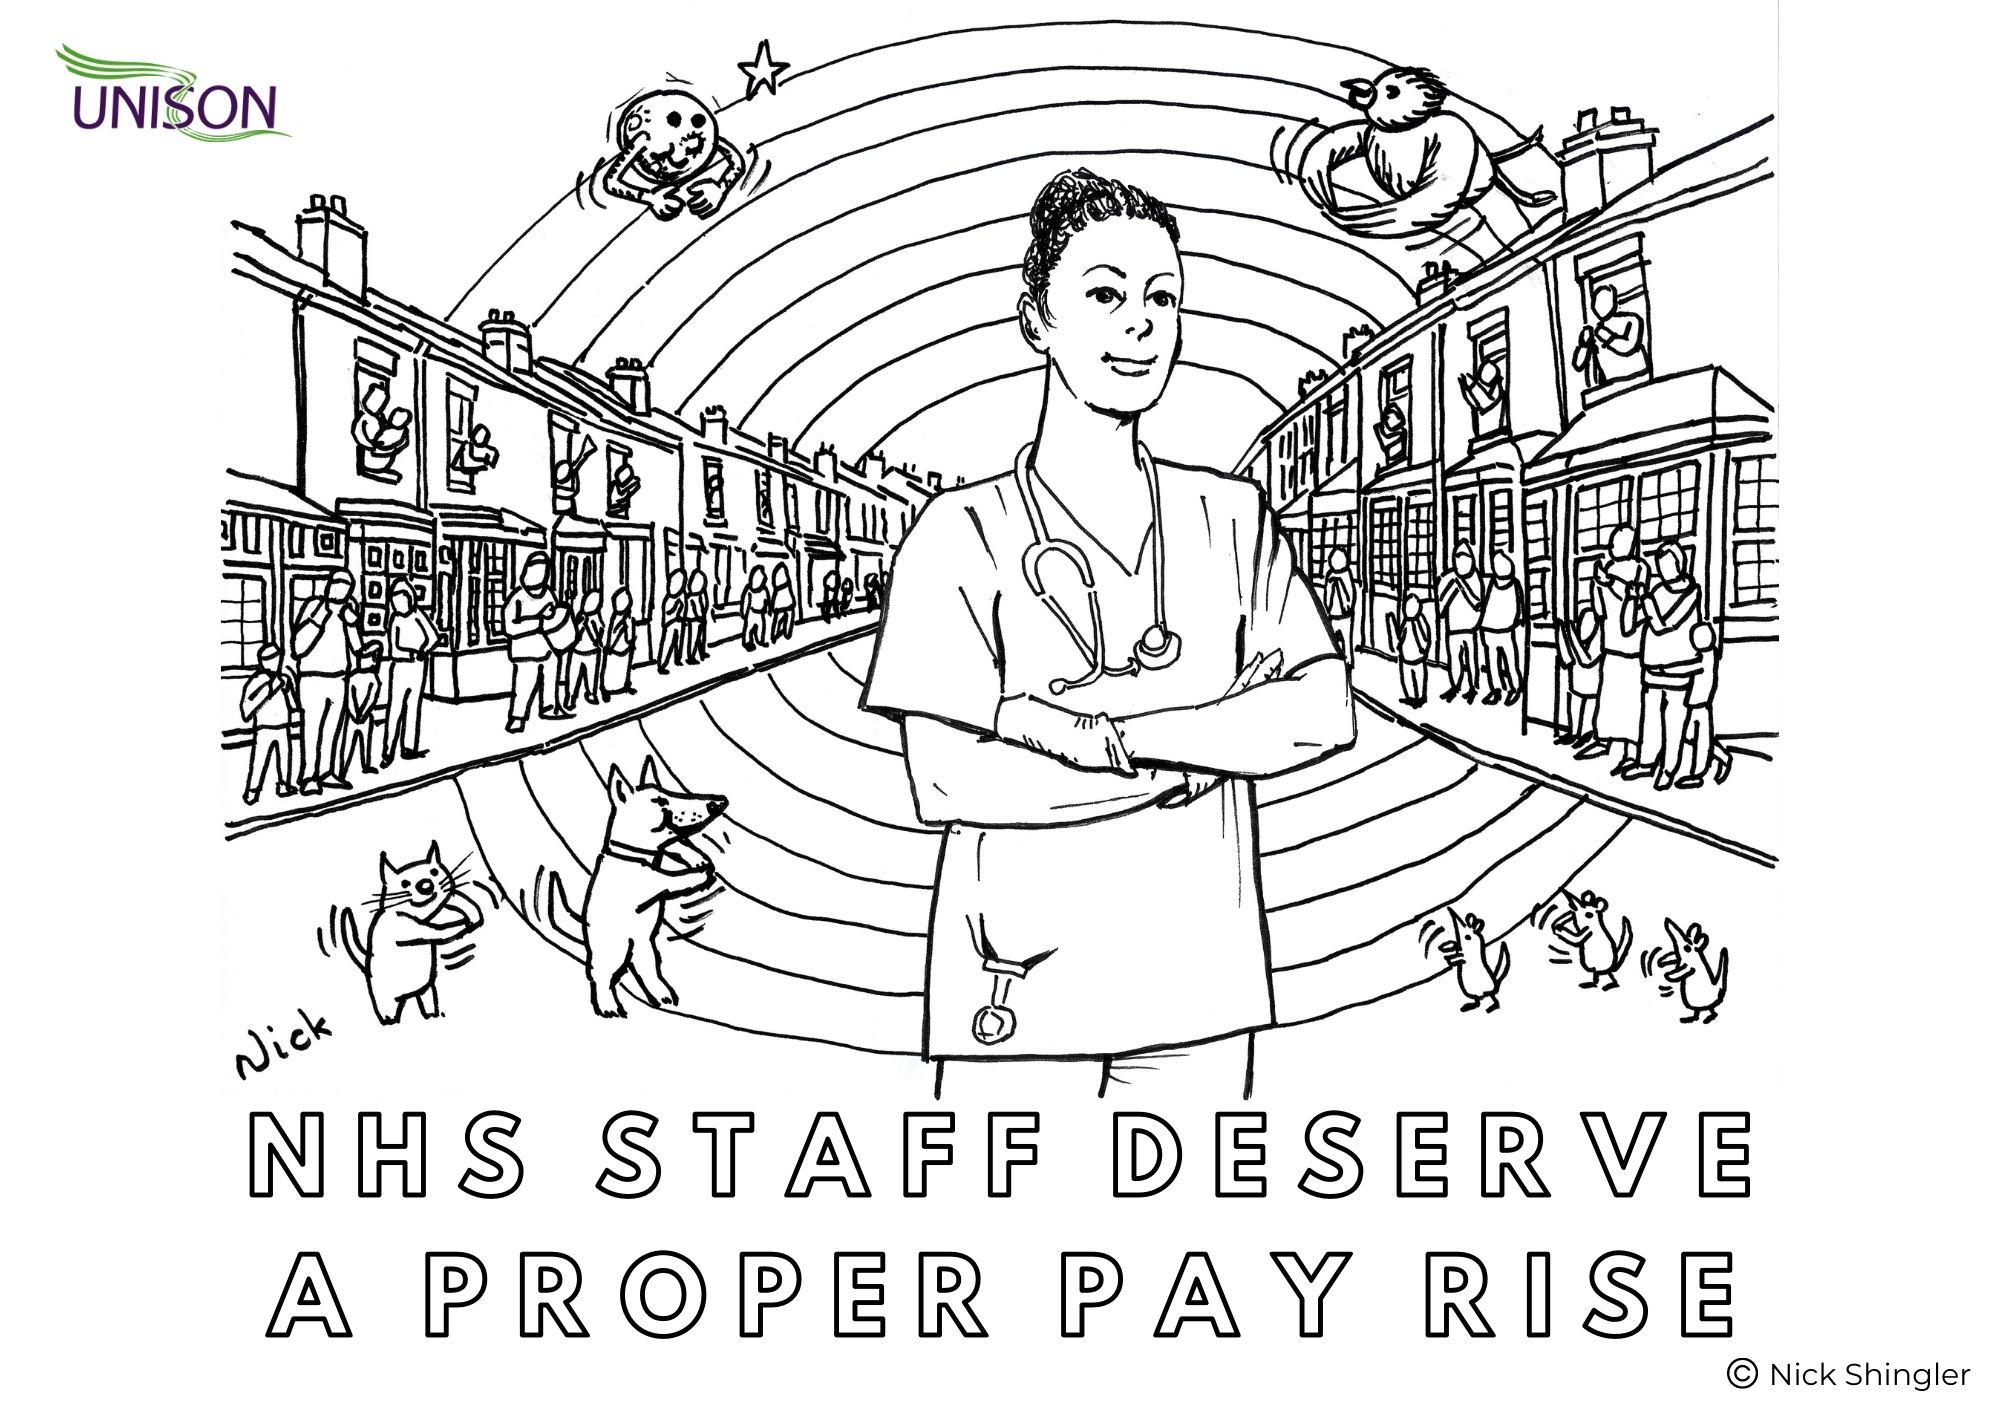 NHS staff deserve a proper pay rise